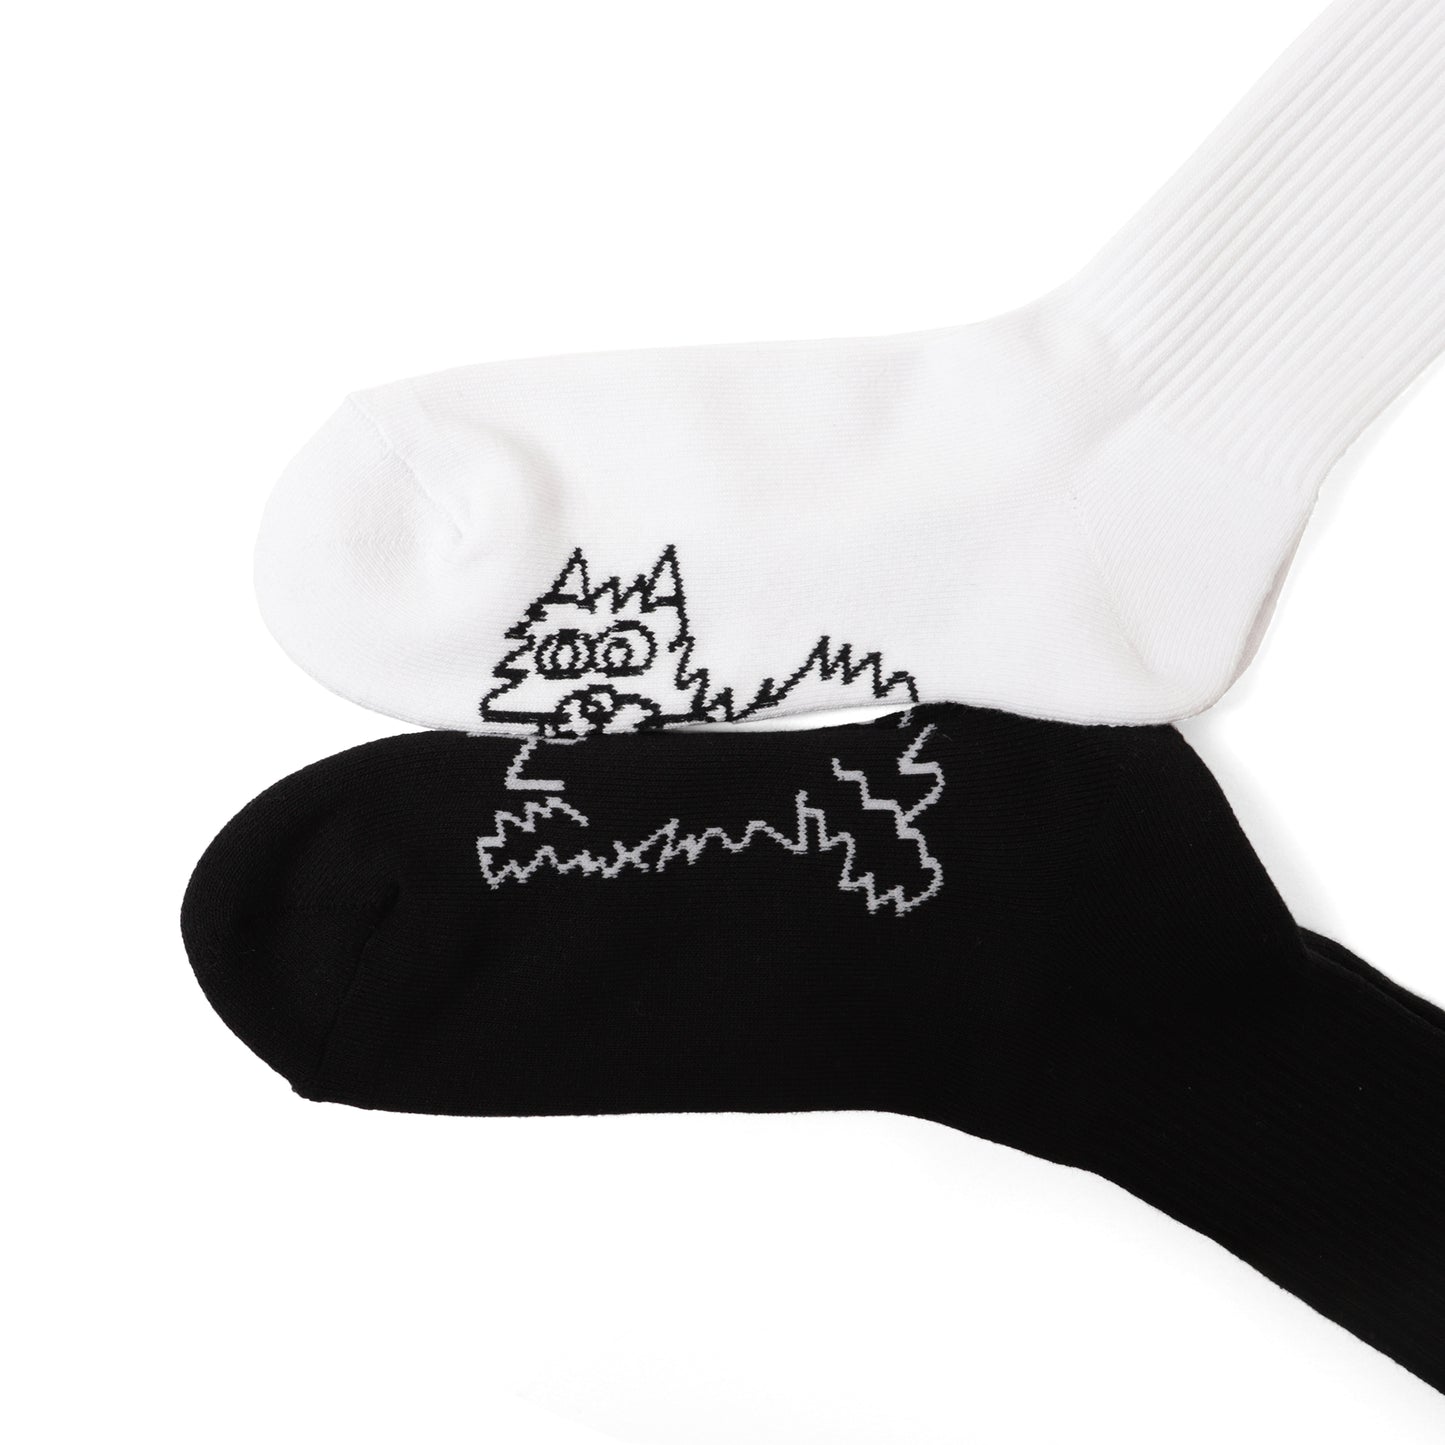 BEAMS JAPAN Himaa Cat Socks (White/Black)